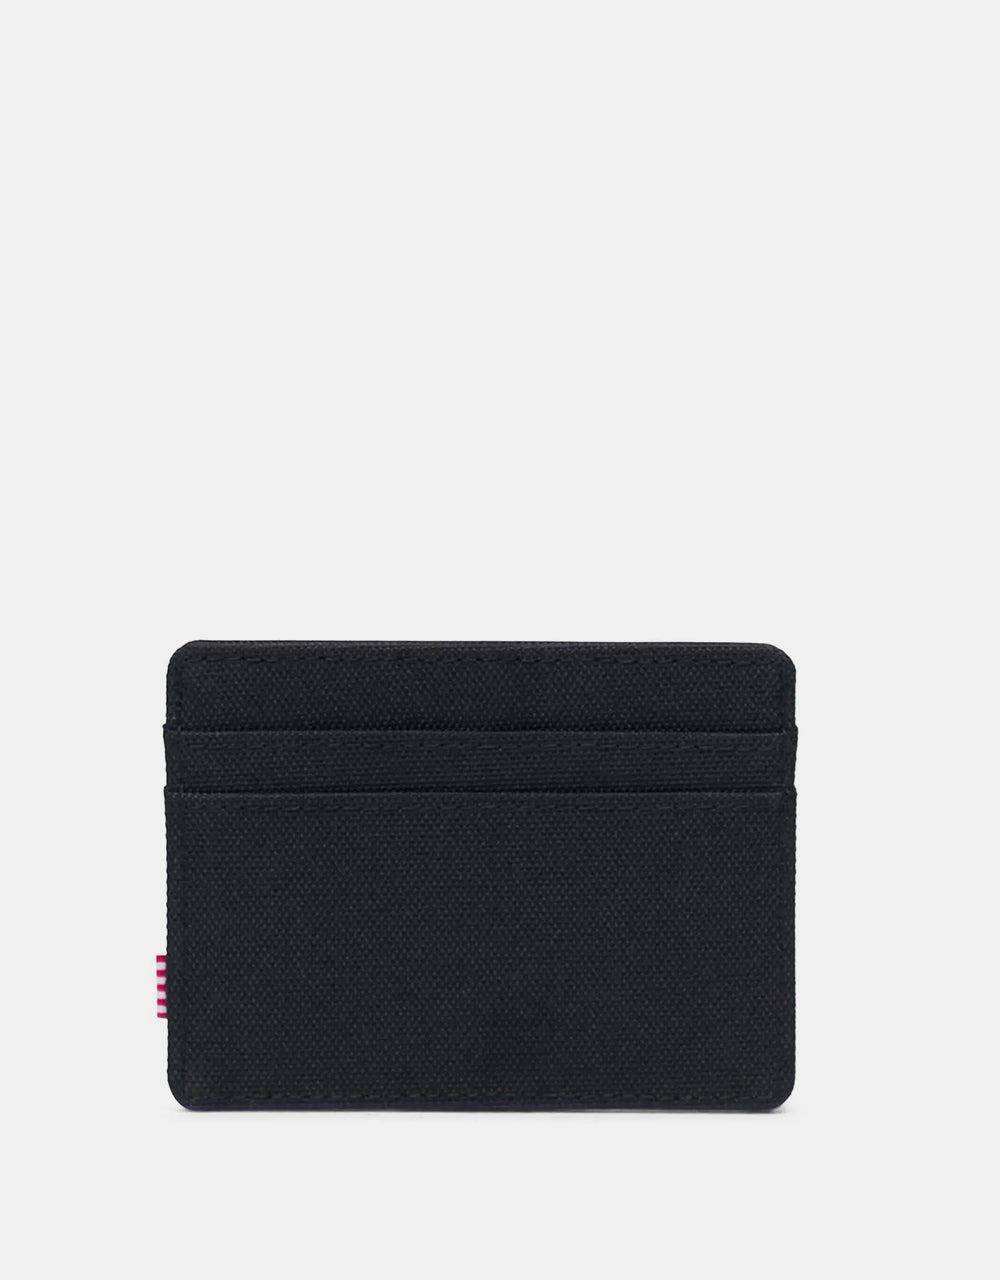 Herschel Supply Co. Charlie RFID Cardholder - Black